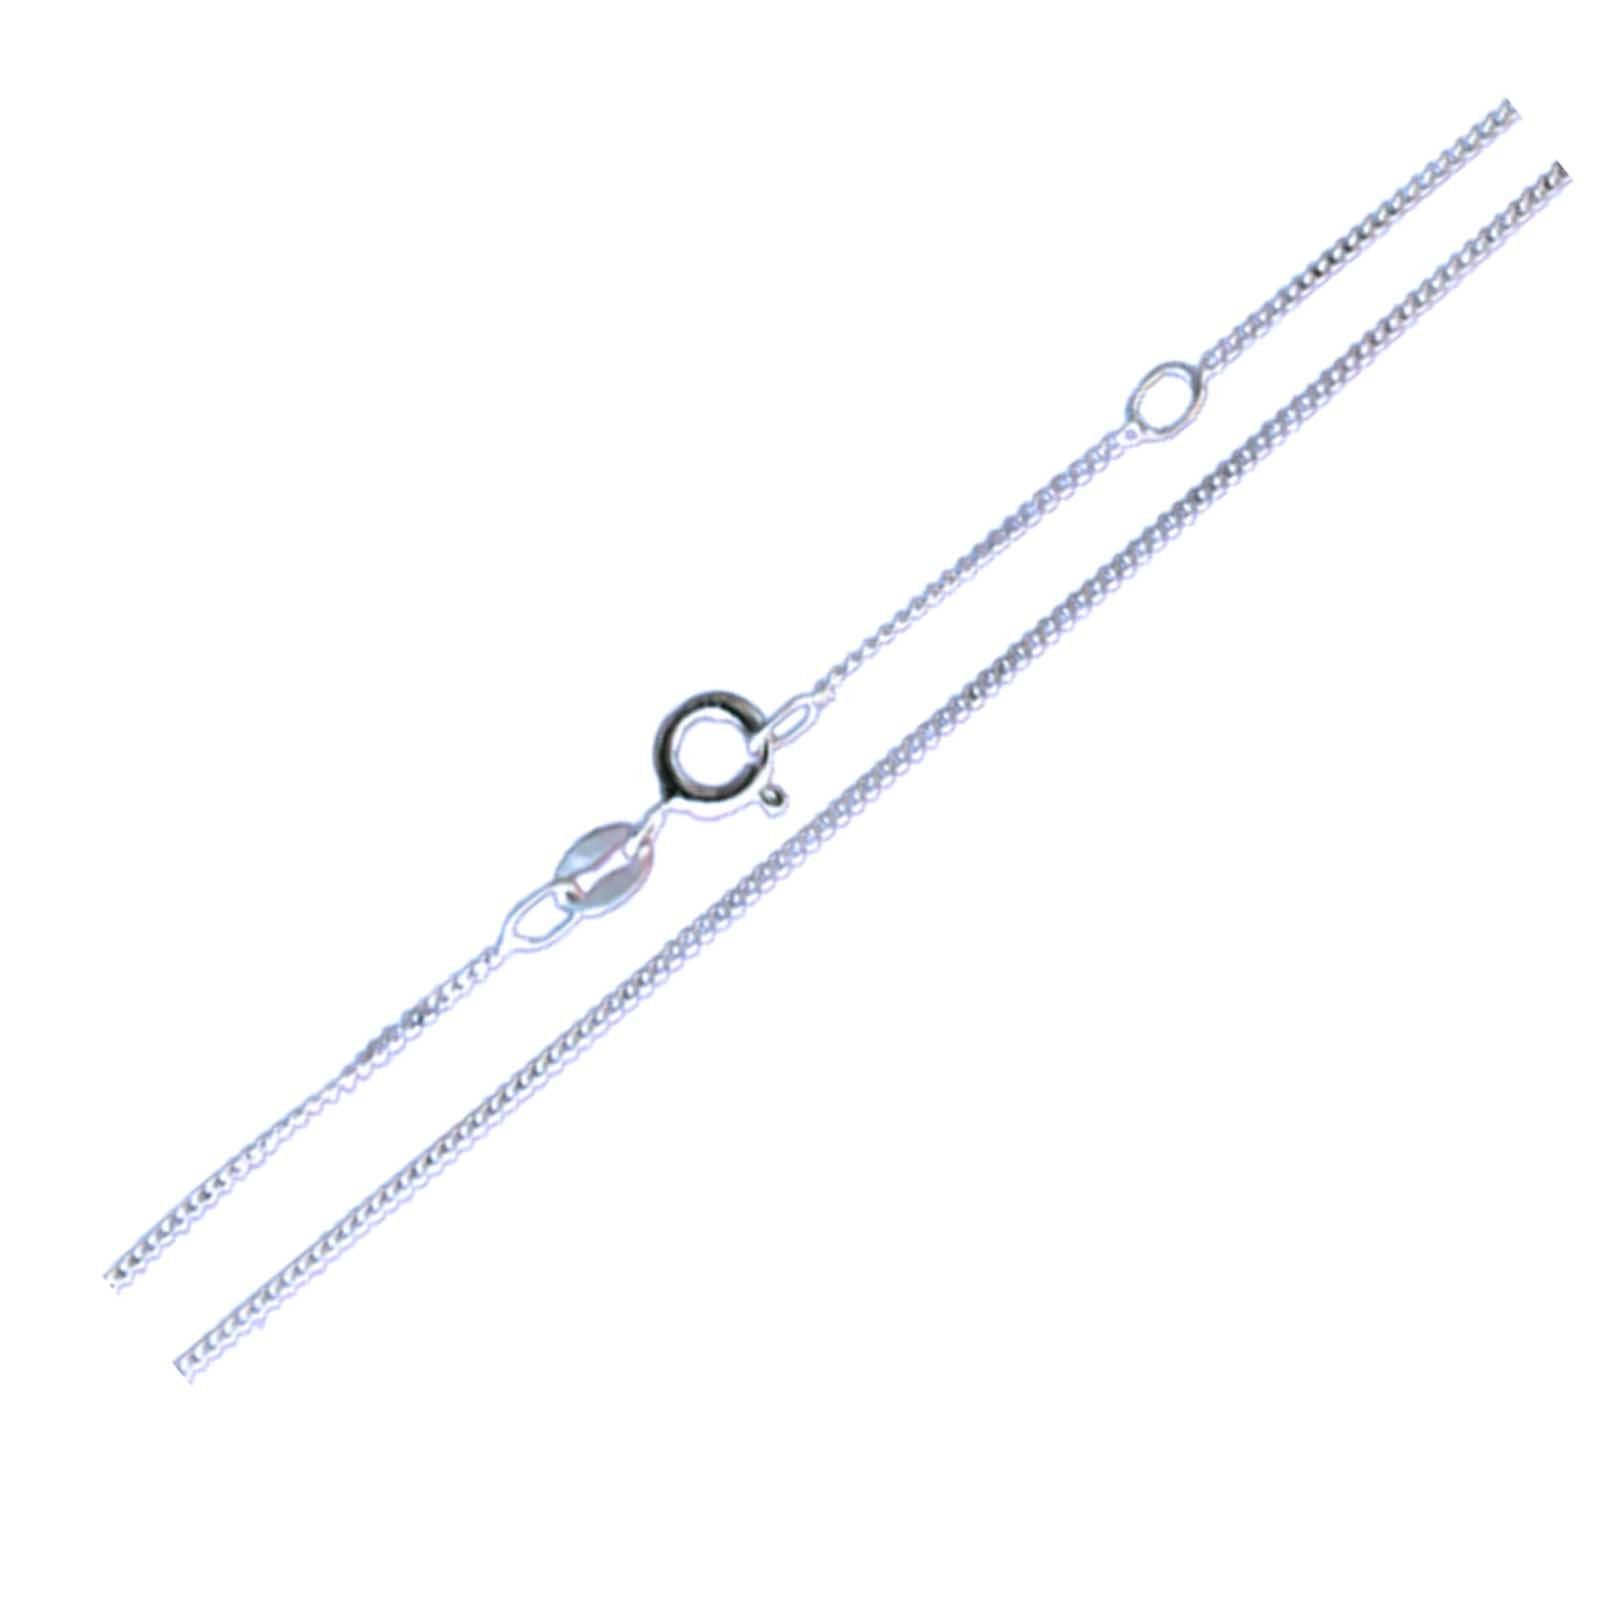 Kettenanhänger (Halskette Halskette Kinderschmuck Kettenanhänger mit Silberanhänger schmuck23 Anhänger),